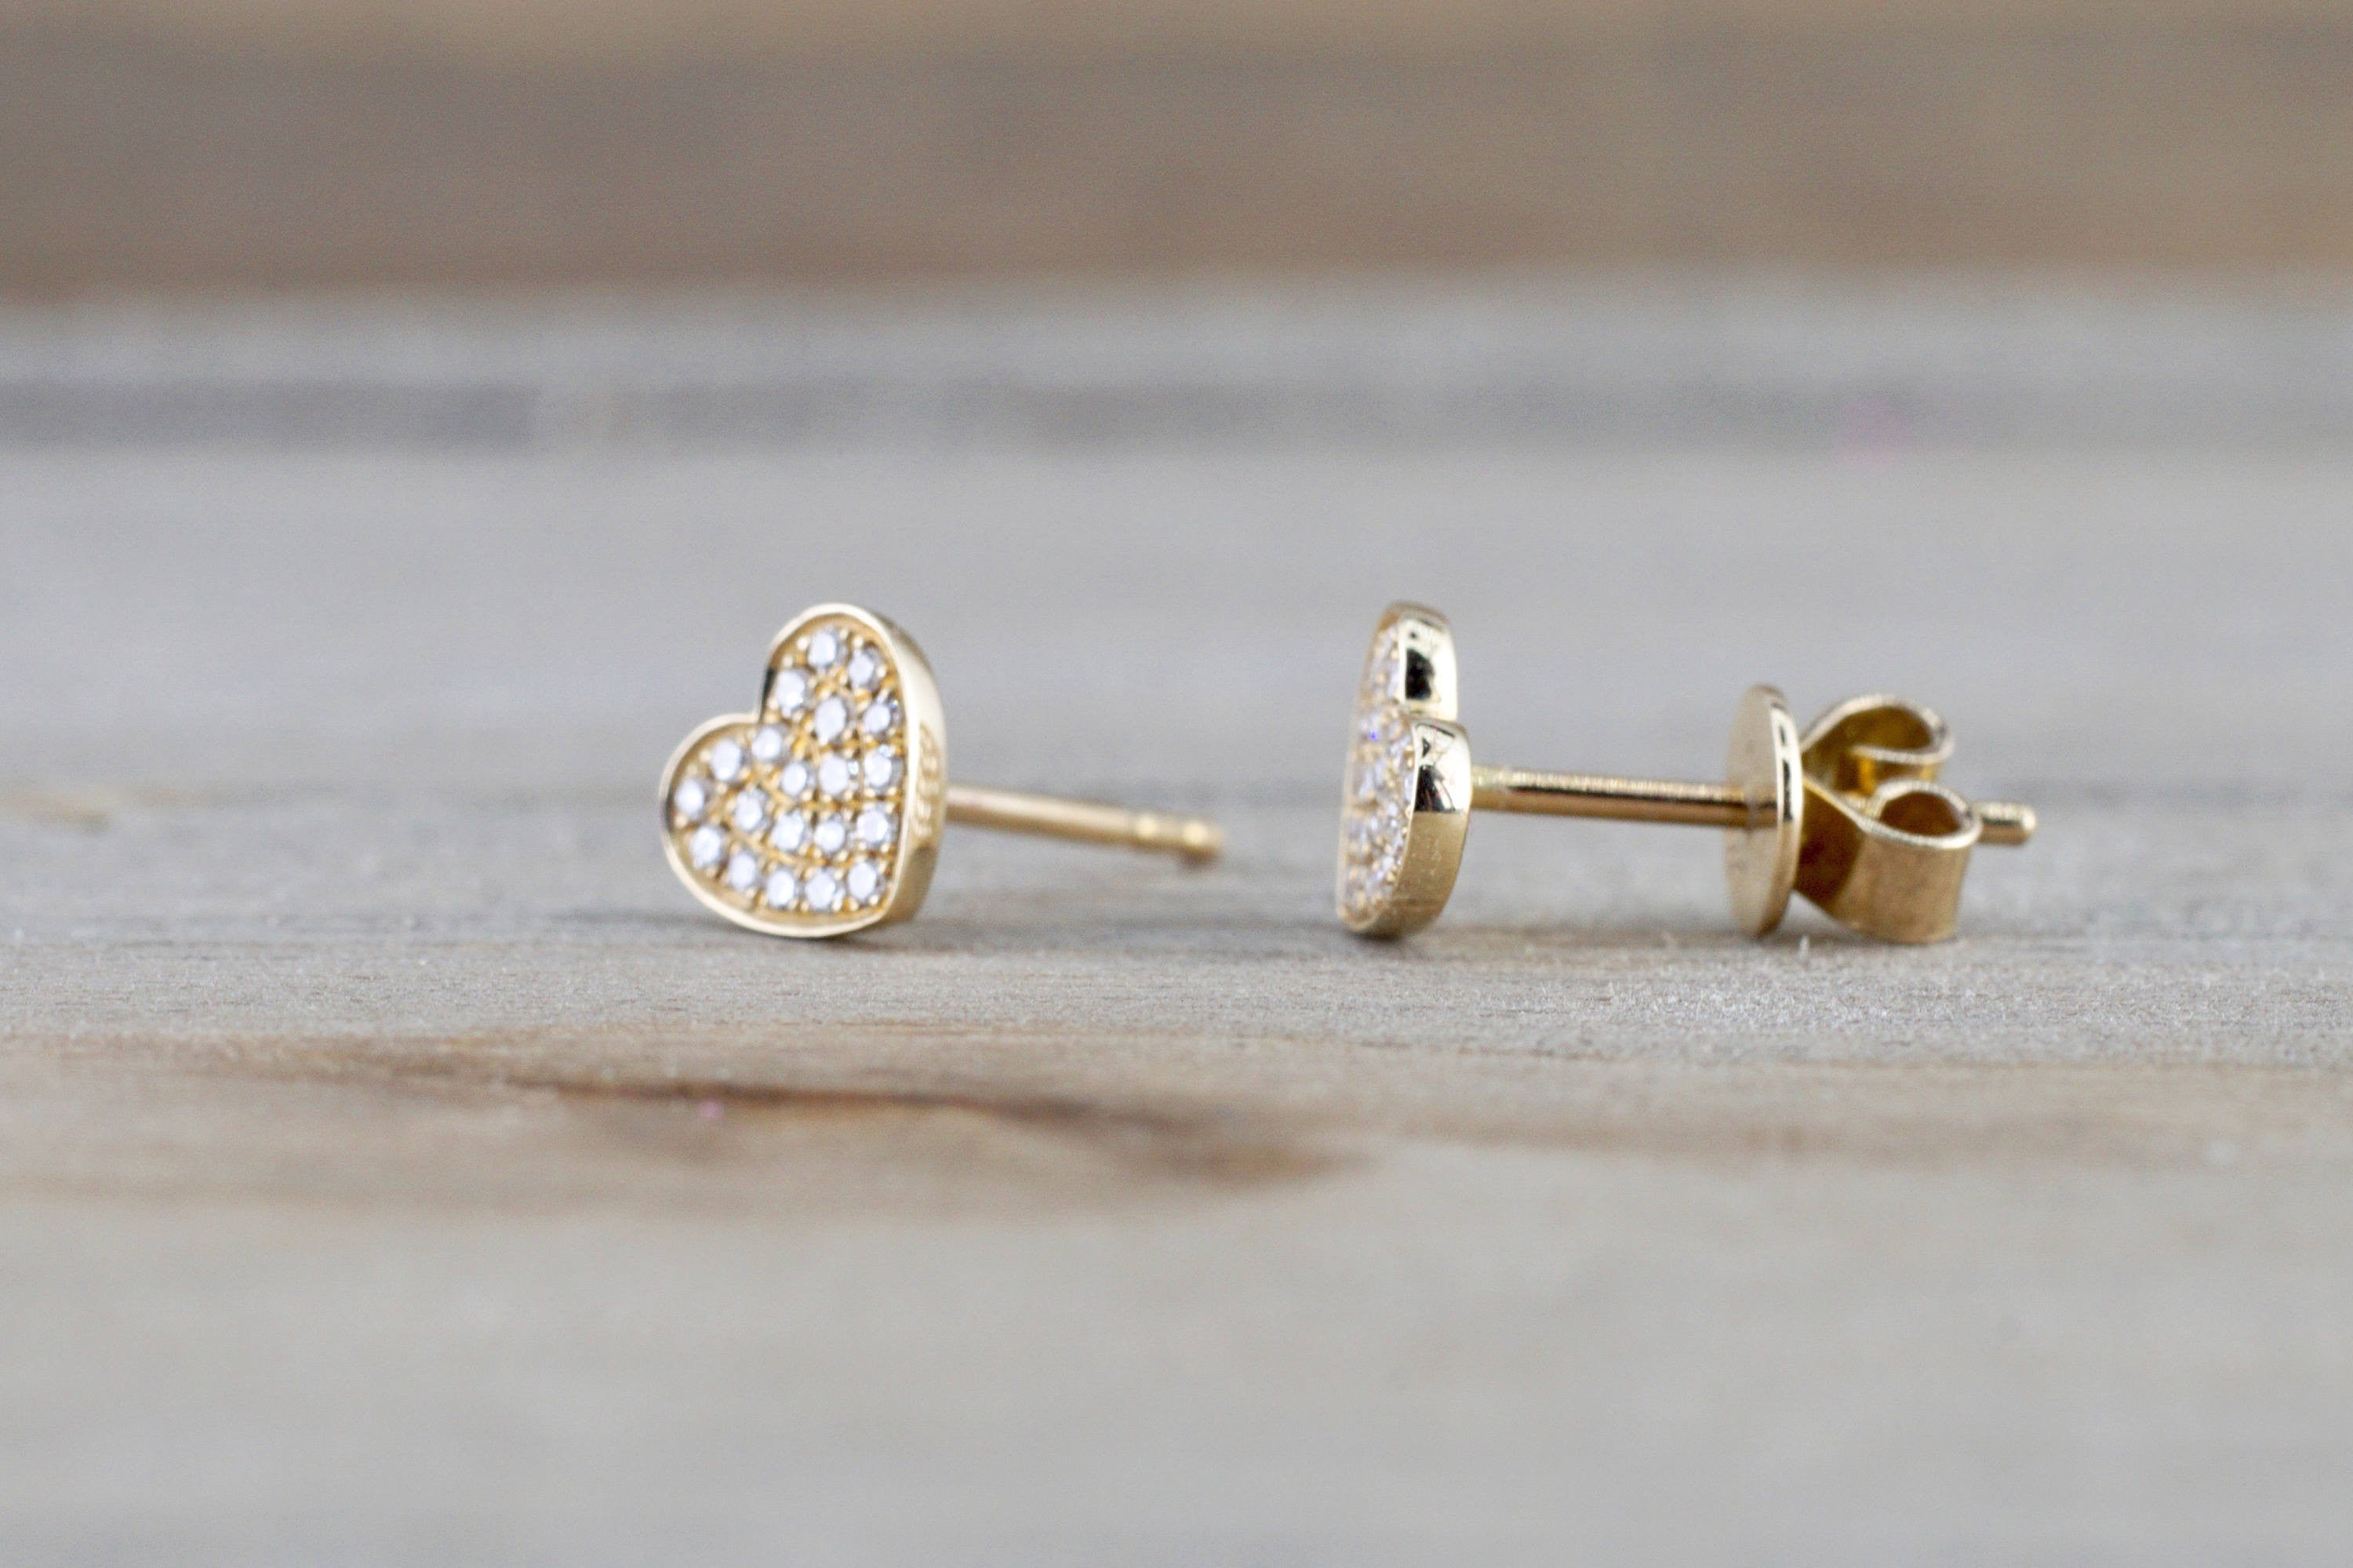 14k Yellow Gold Disk Design Heart Diamond Earrings Stud Post Studs Round Micro Pave Flat